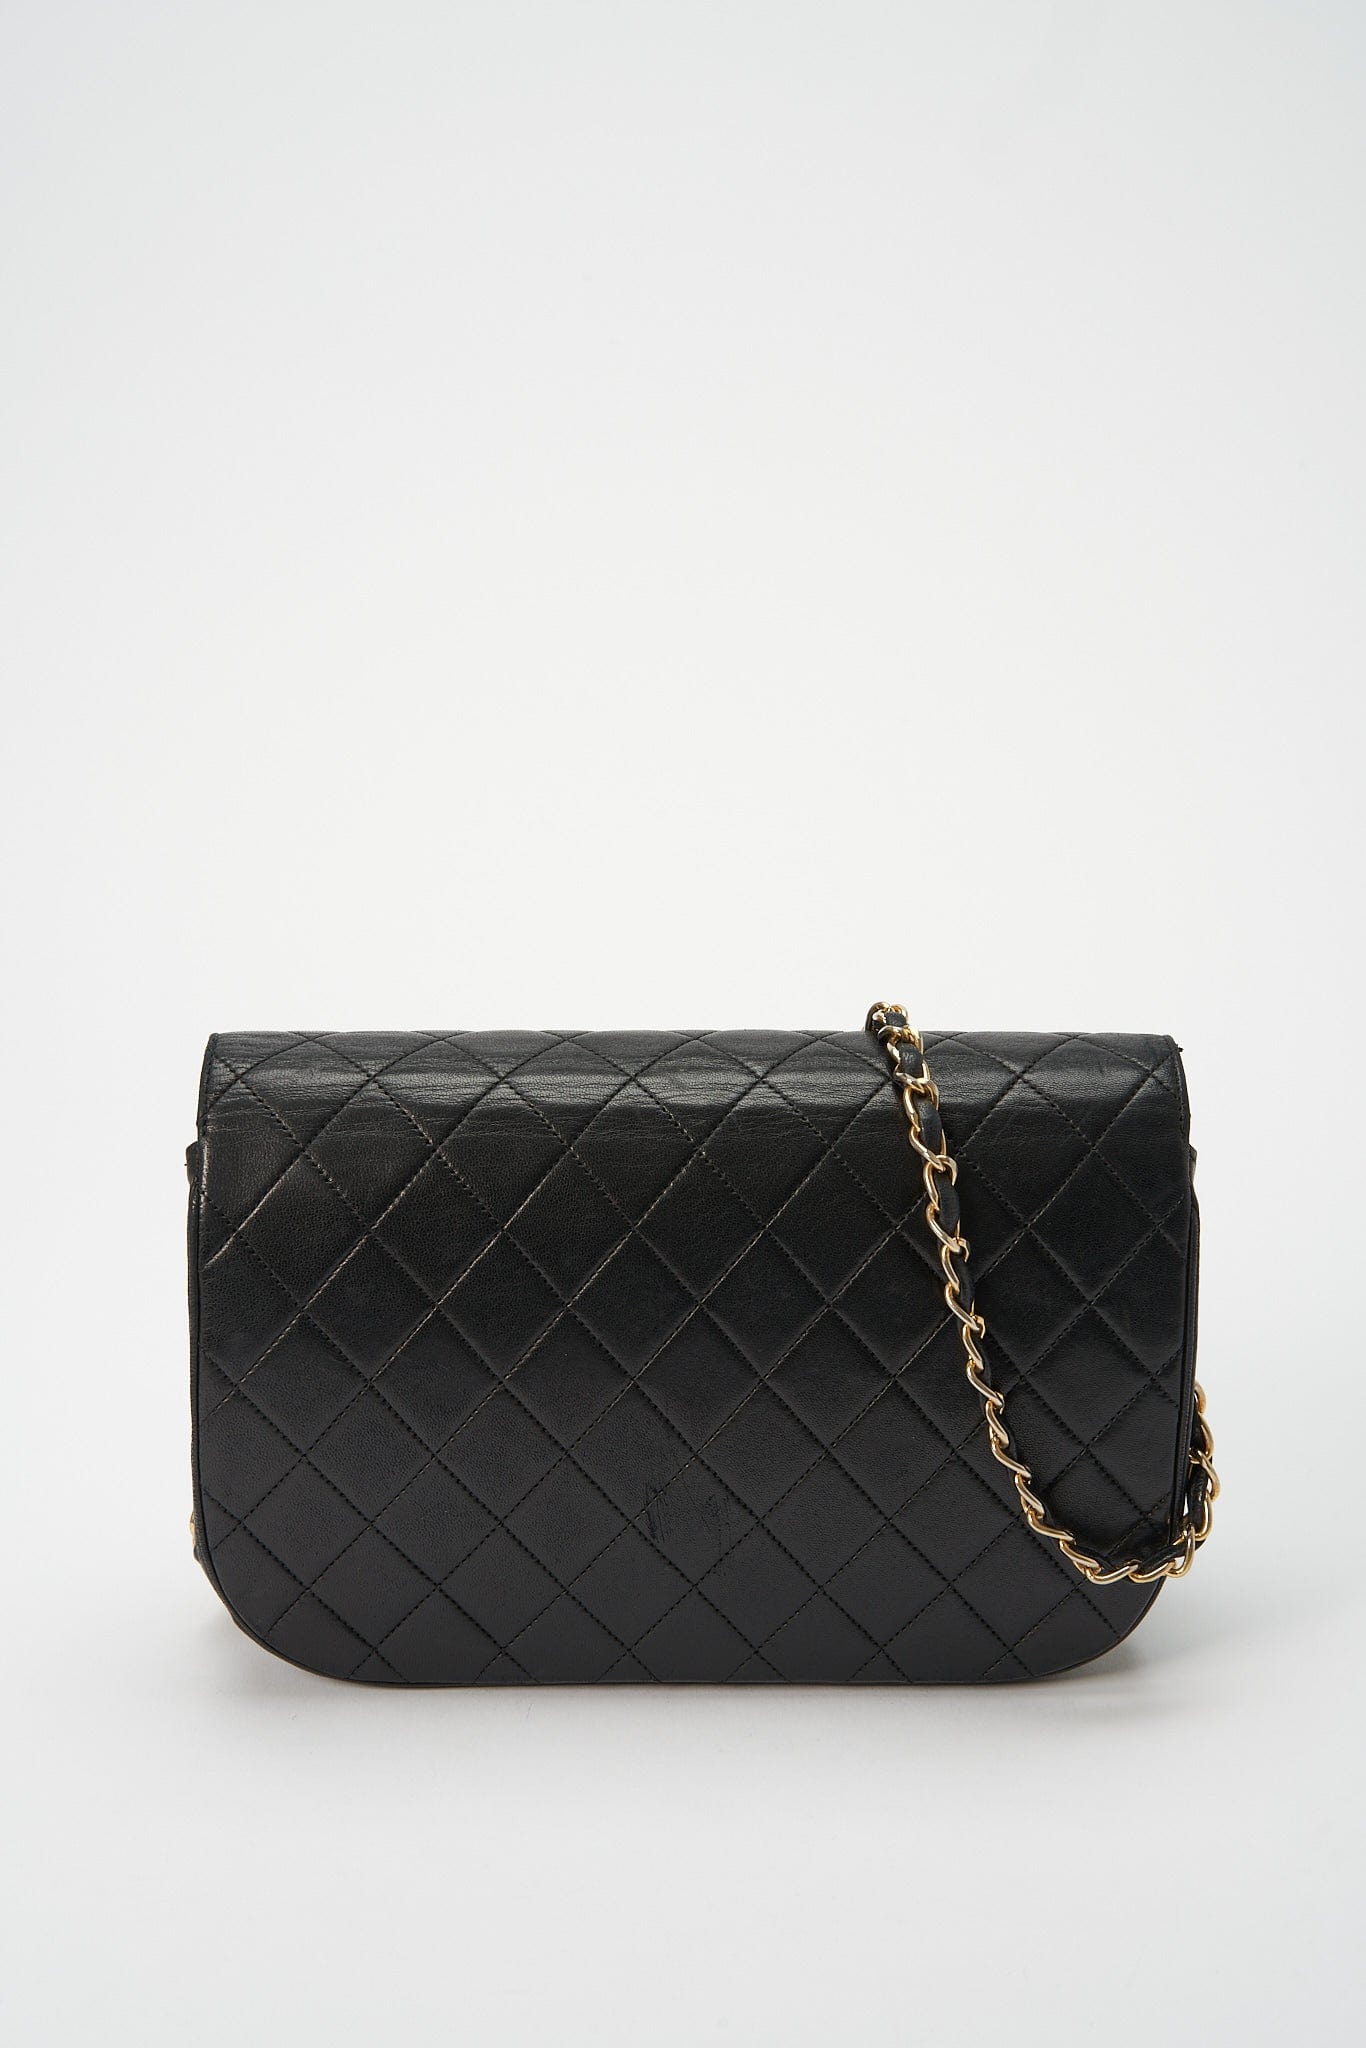 Chanel 2005 Black Giant Oversized CC Medium Flap Bag RHW – Boutique Patina